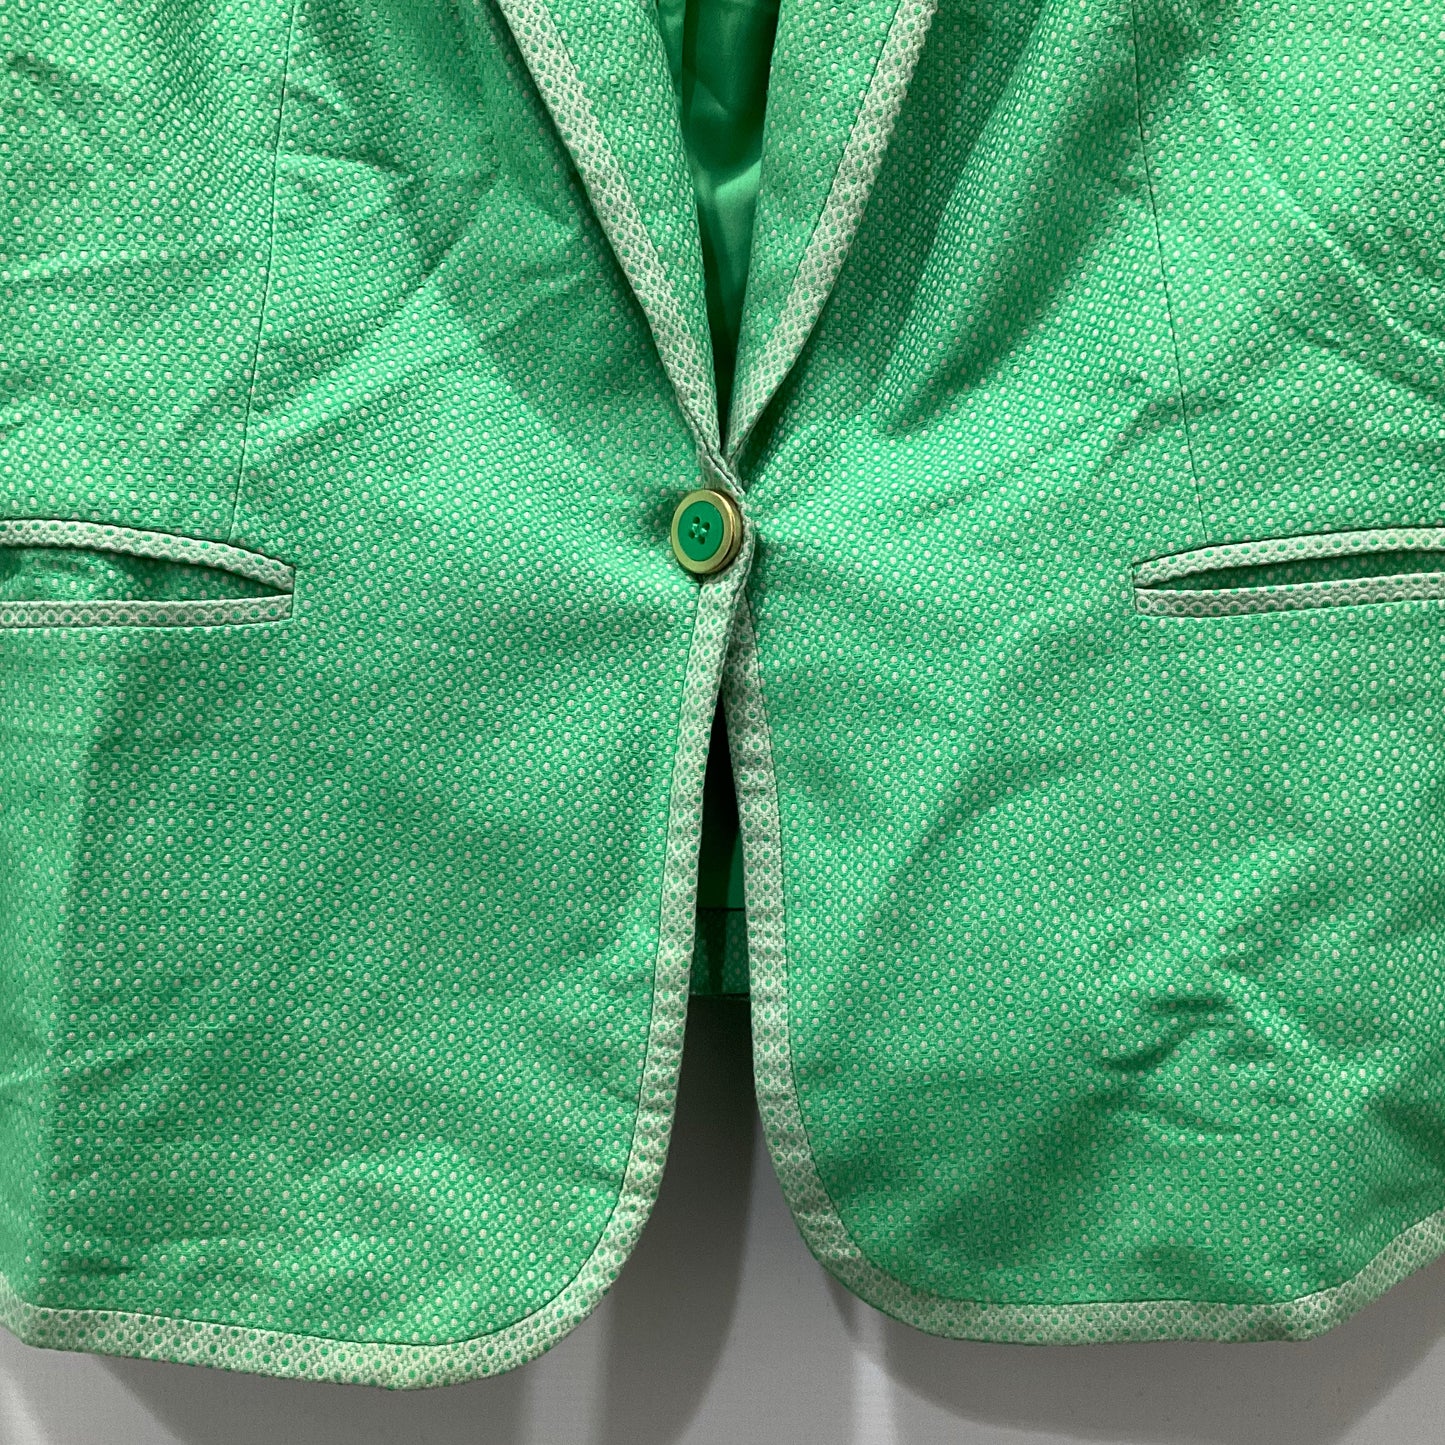 Green Blazer Limited, Size L